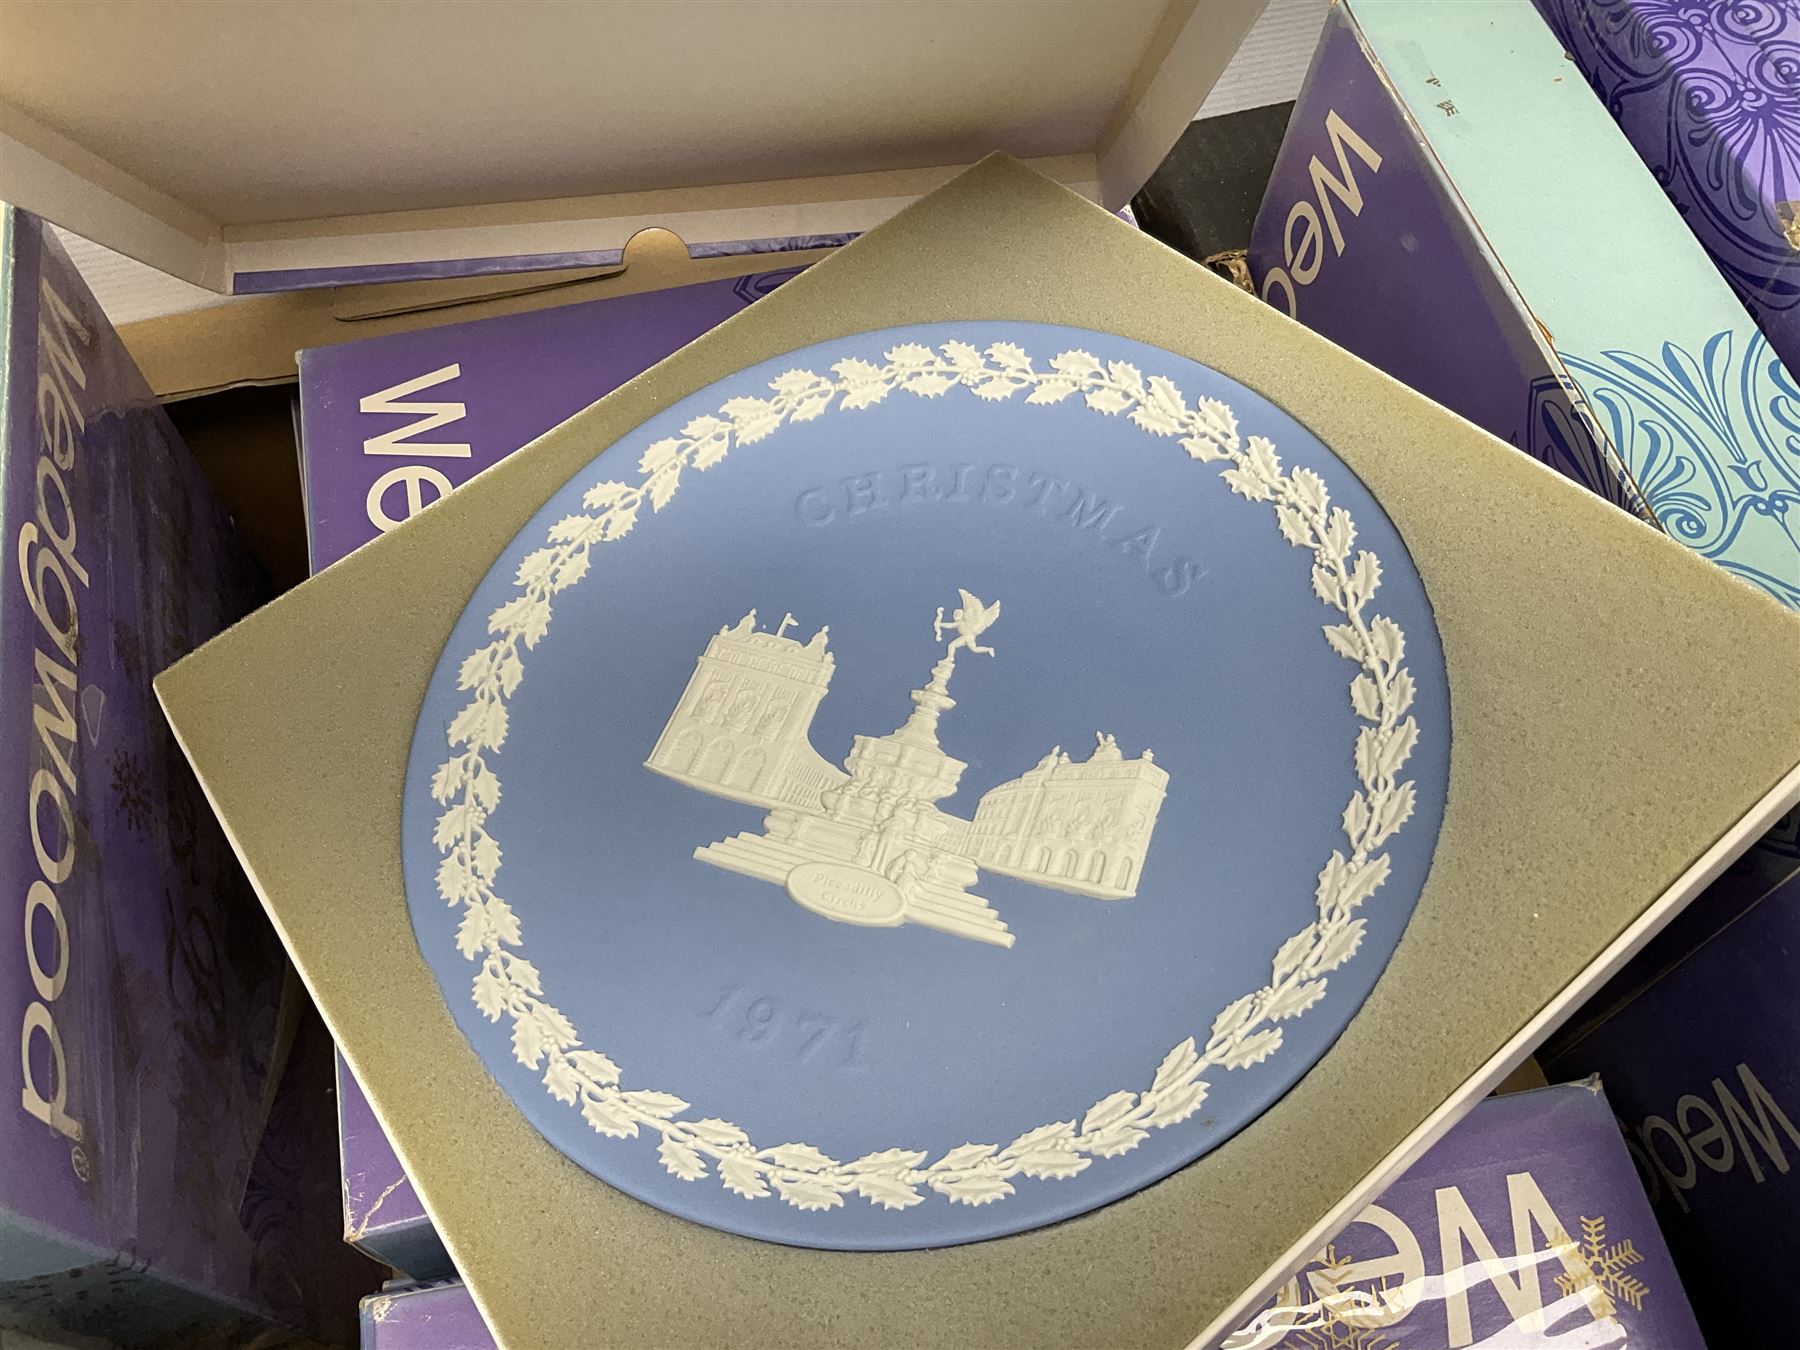 Wedgwood Jasperware Christmas collectors plates to include London Landmarks - Image 3 of 3